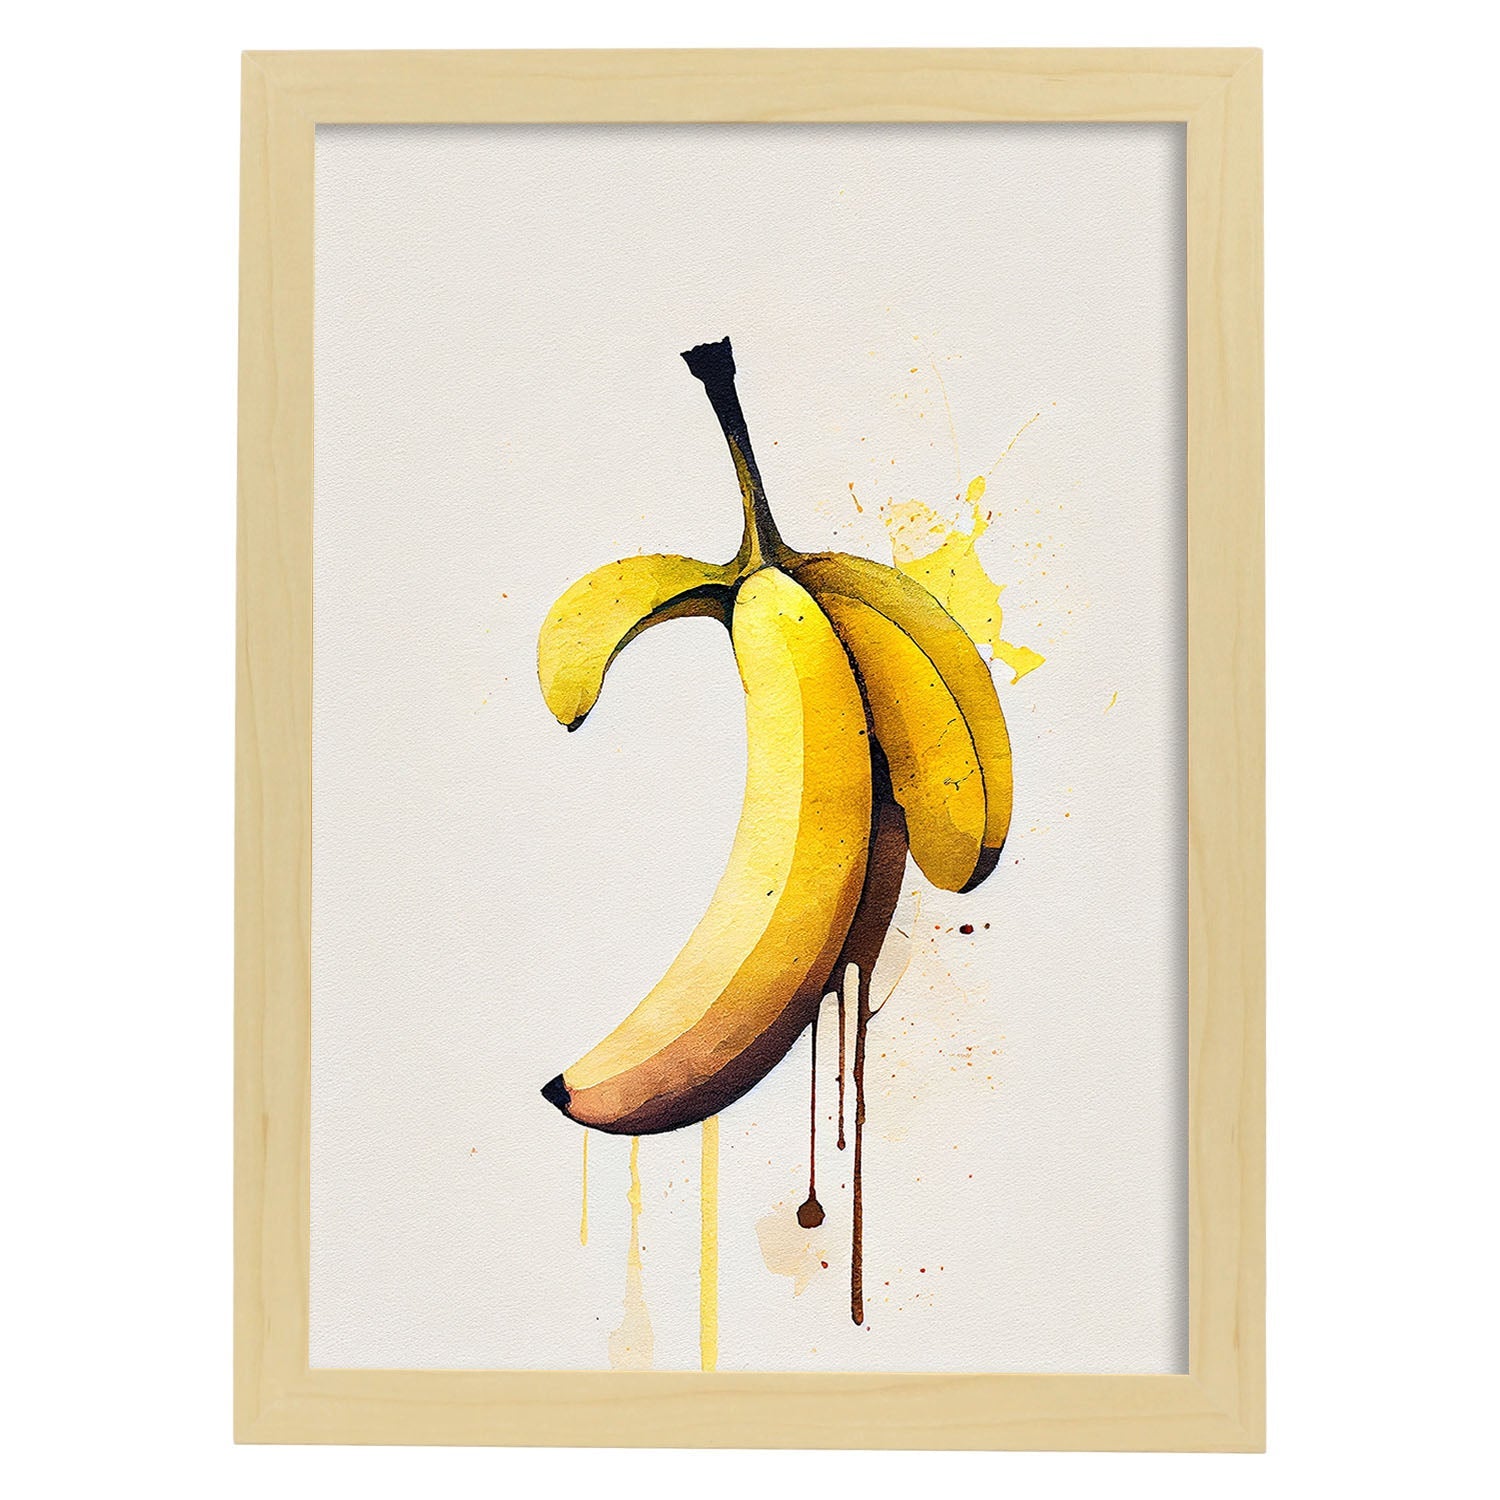 Nacnic minimalist Banana. Aesthetic Wall Art Prints for Bedroom or Living Room Design.-Artwork-Nacnic-A4-Marco Madera Clara-Nacnic Estudio SL